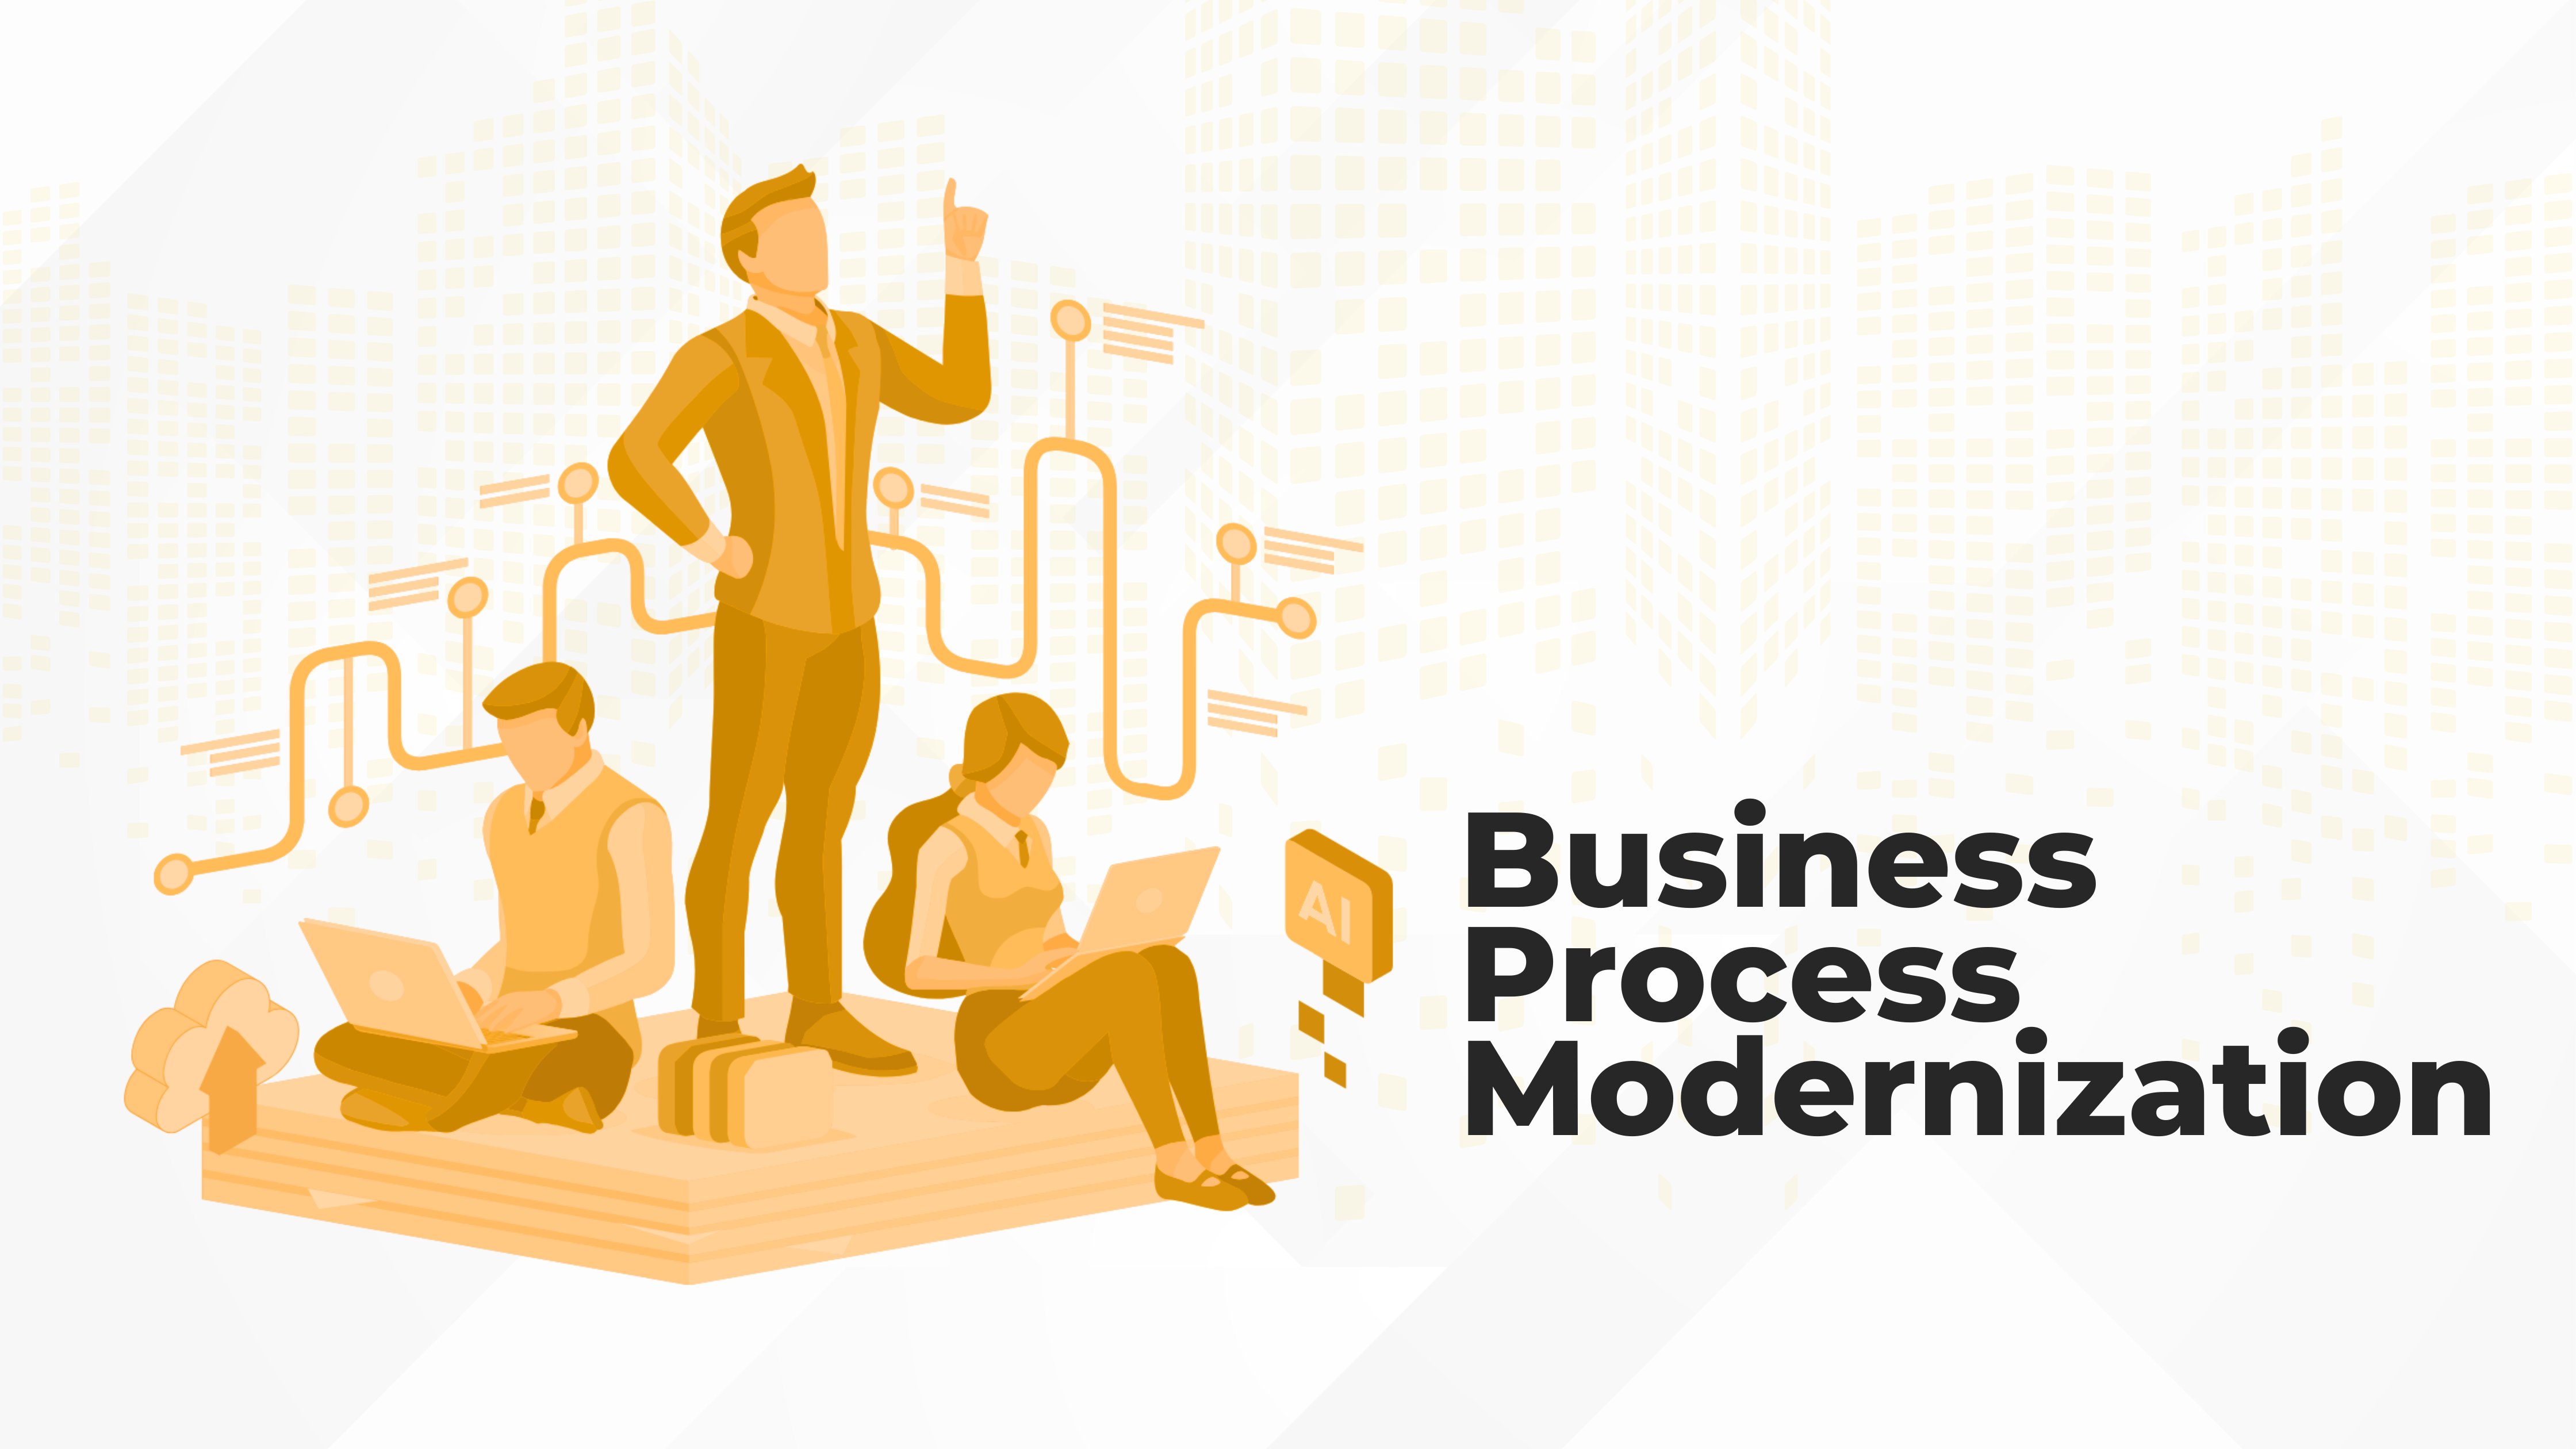 A Guide to Business Process Modernization